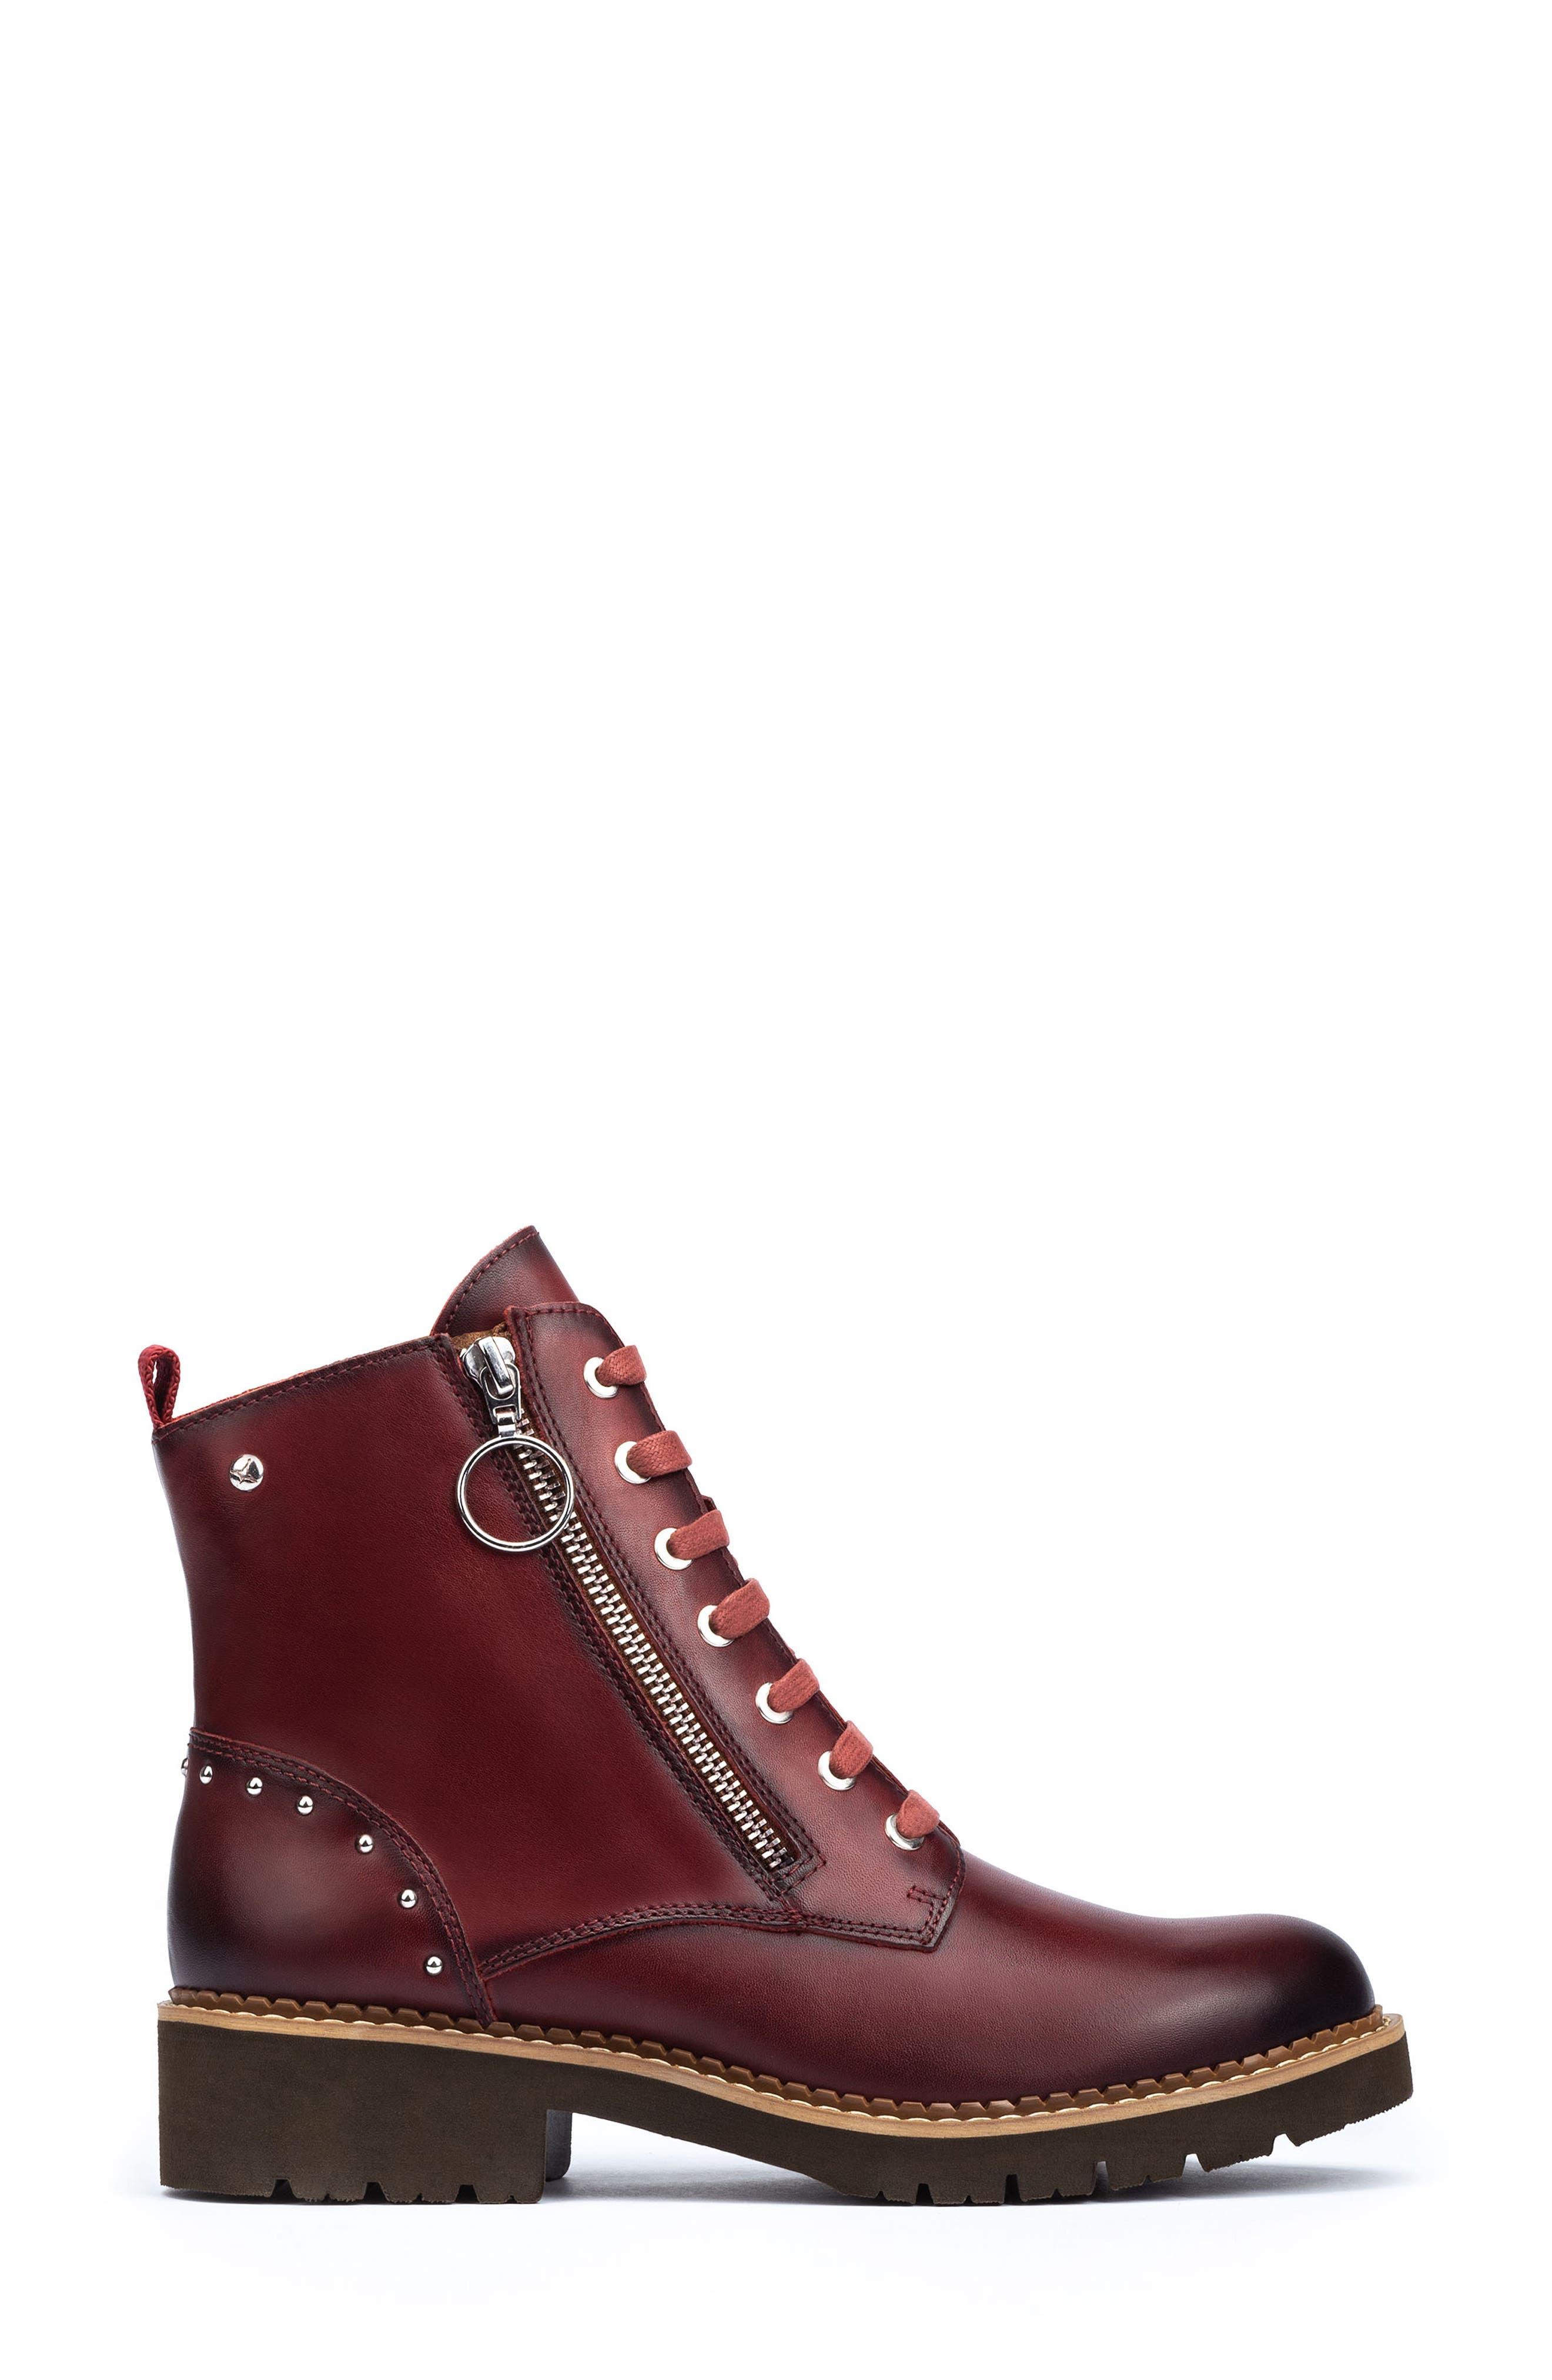 Buy > pikolinos vicar boots > in stock